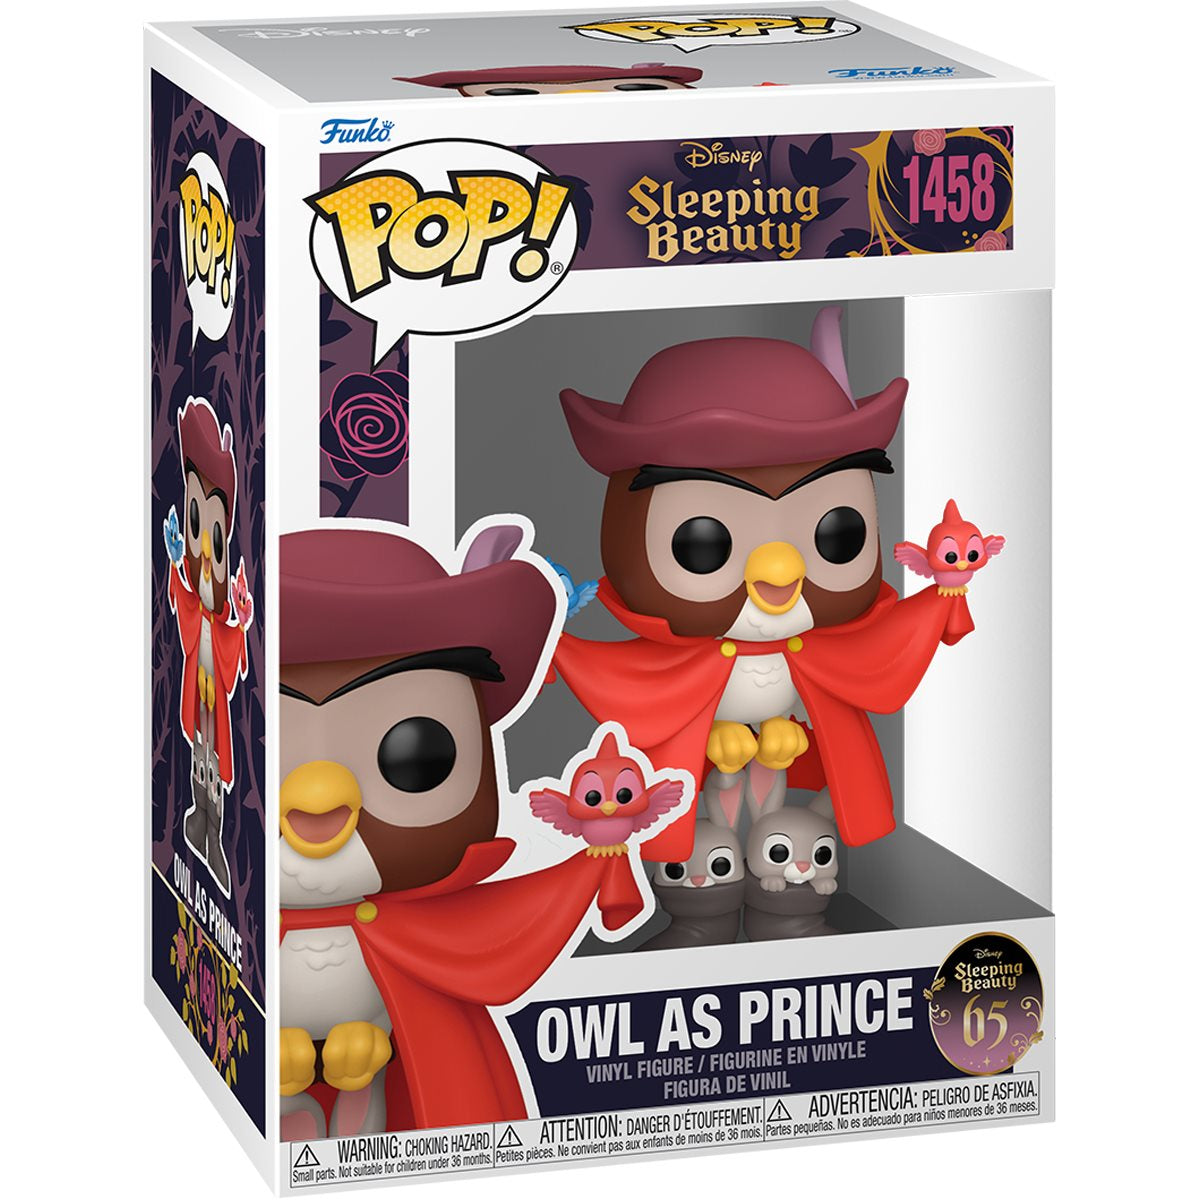 Funko Pop! Disney Sleeping Beauty 65th Anniversary Owl as Prince Vinyl Figure #1458